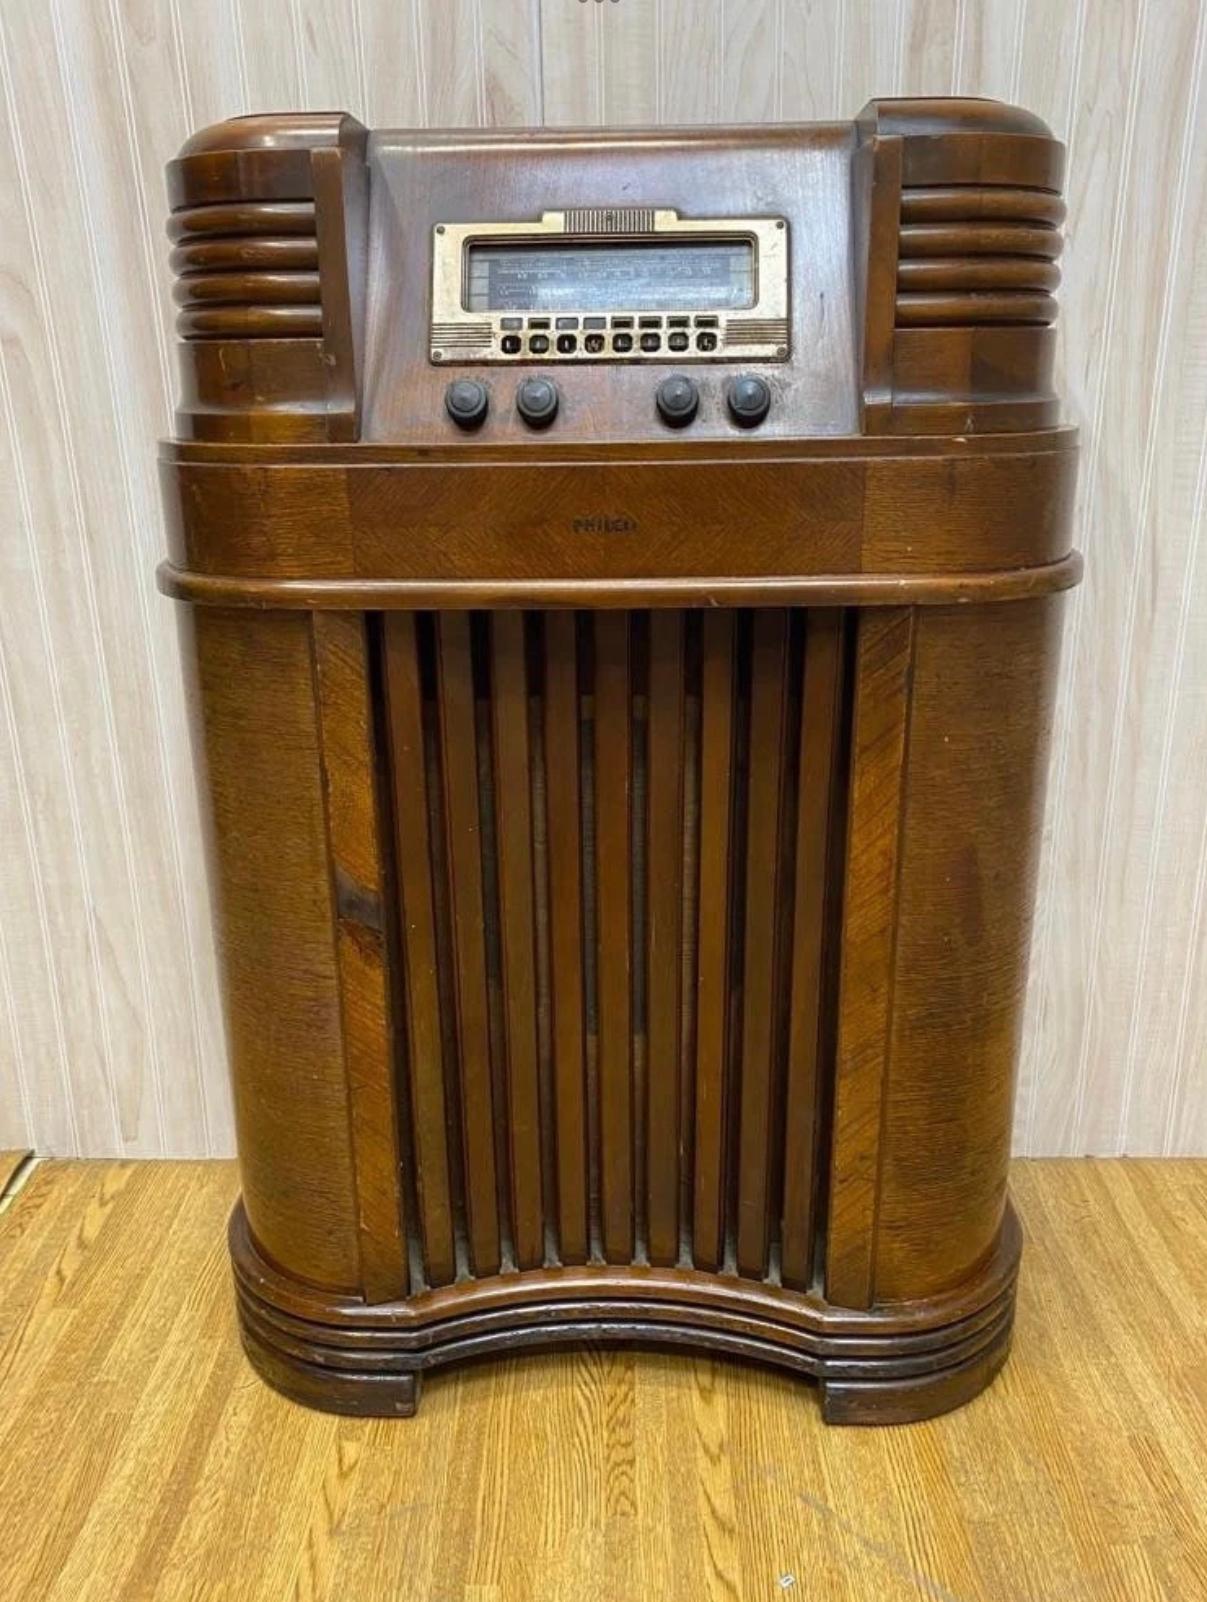 Antique Philco 40-180 Console Floor Radio 

The radio does go on. 

Circa: 1940

Dimensions:
H: 40